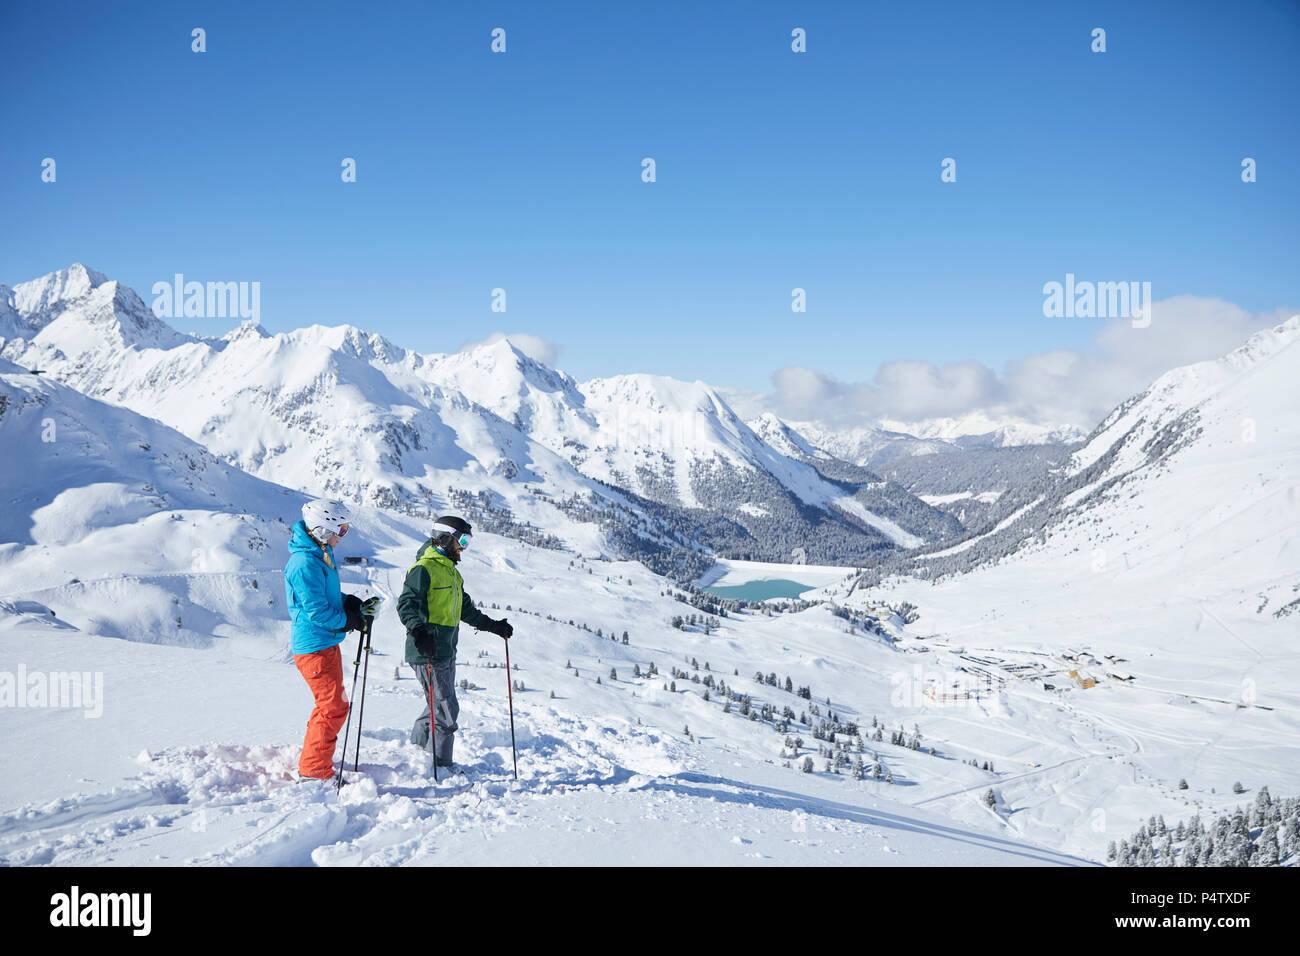 Austria, Tyrol, Kuehtai, two skiers in winter landscape Stock Photo